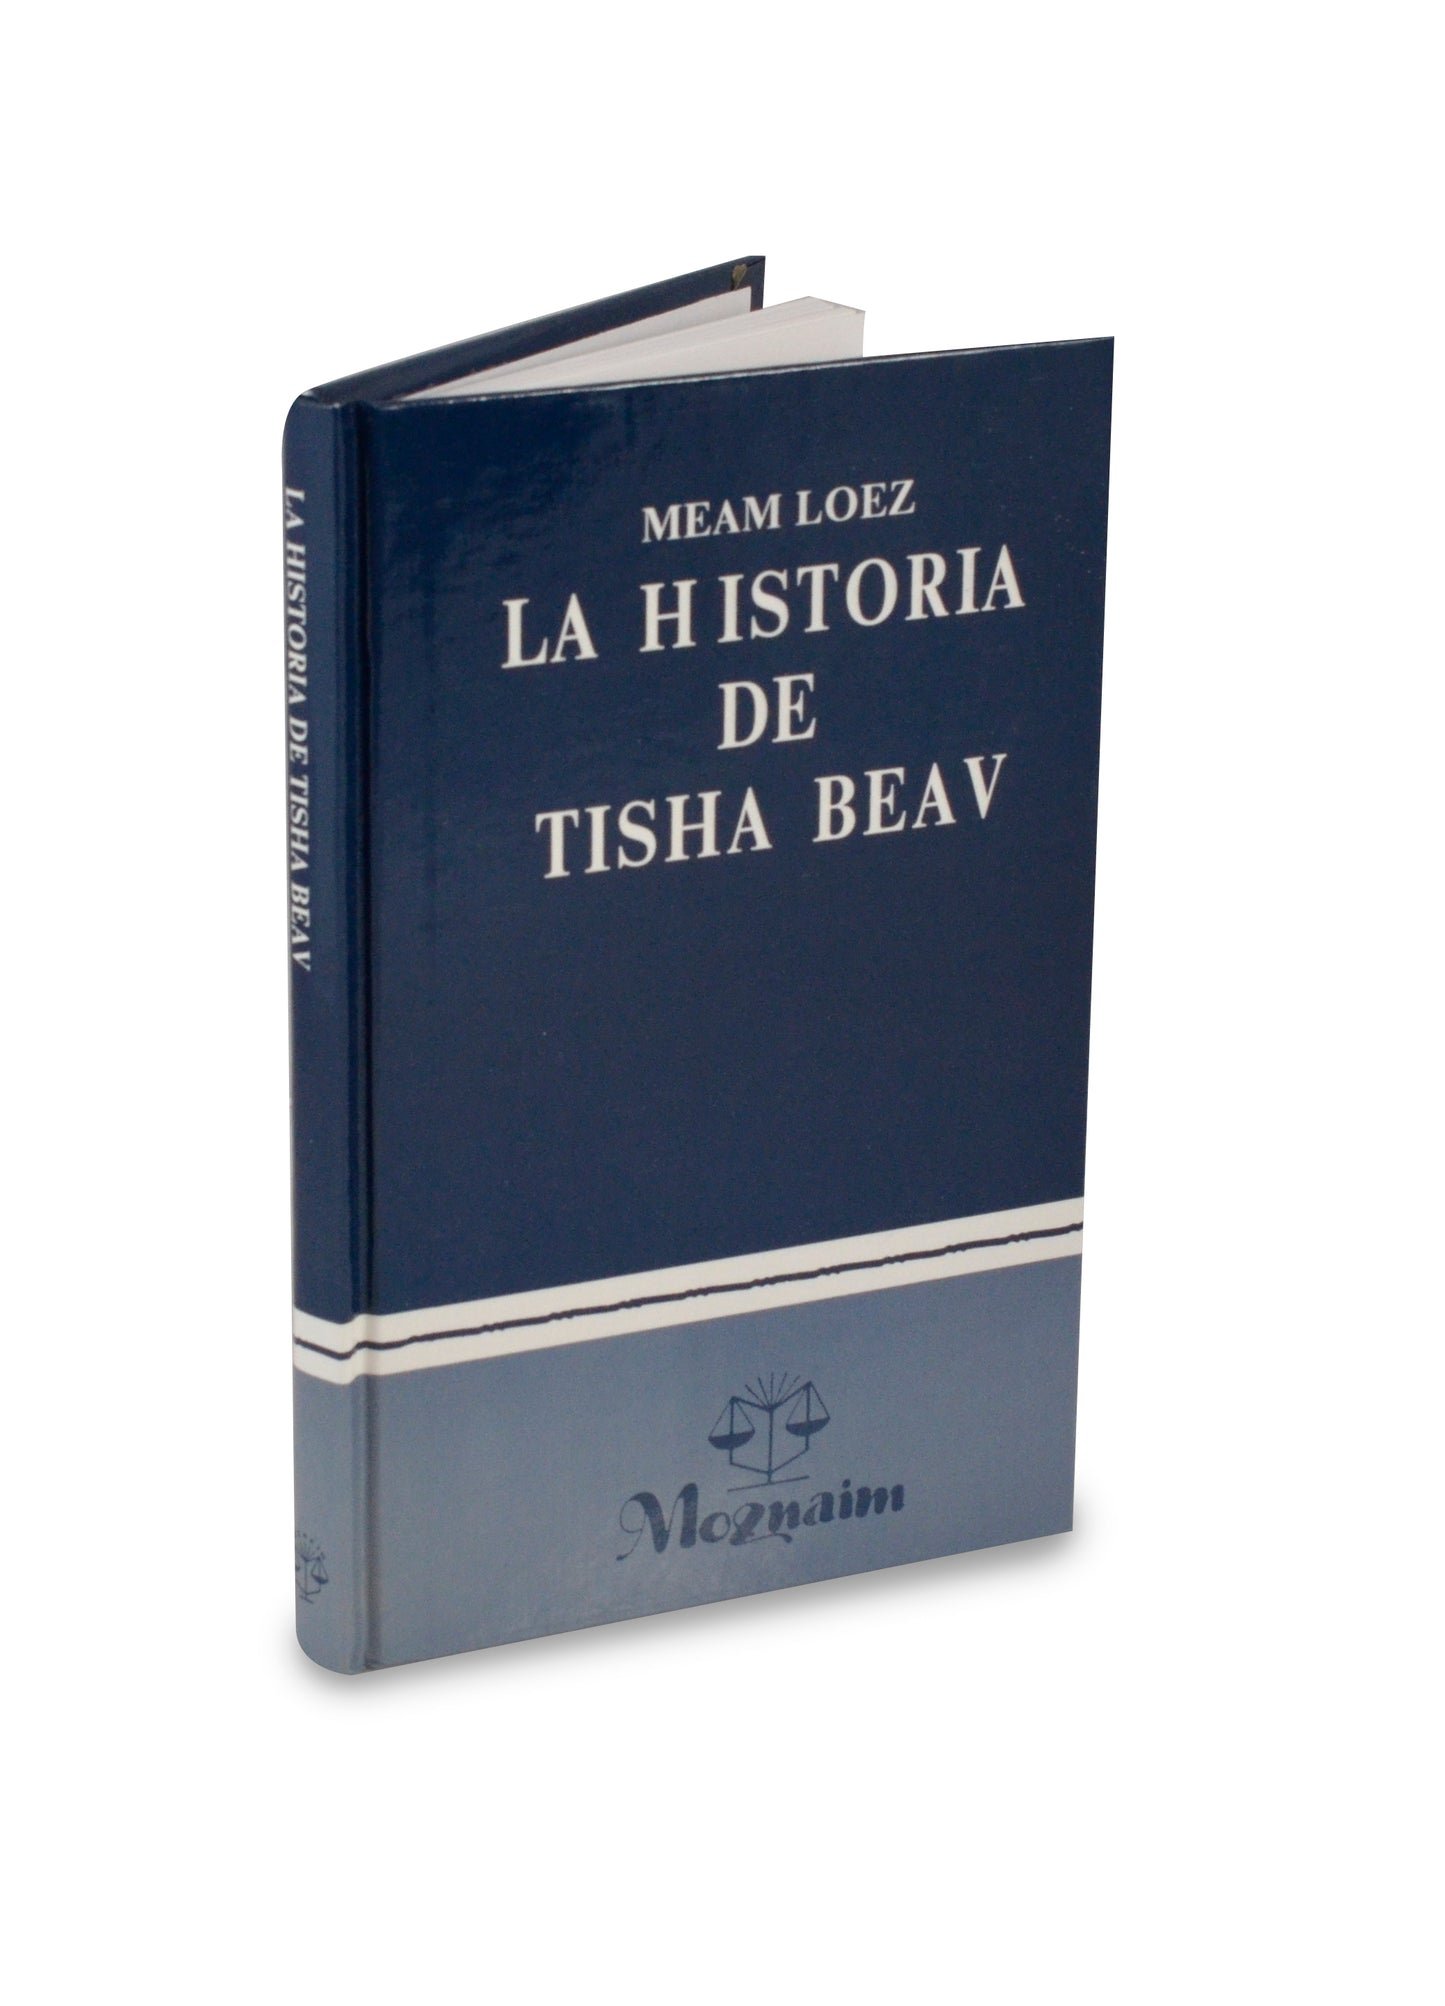 La Historia De Tisha Beav - Meam Loez - Spanish